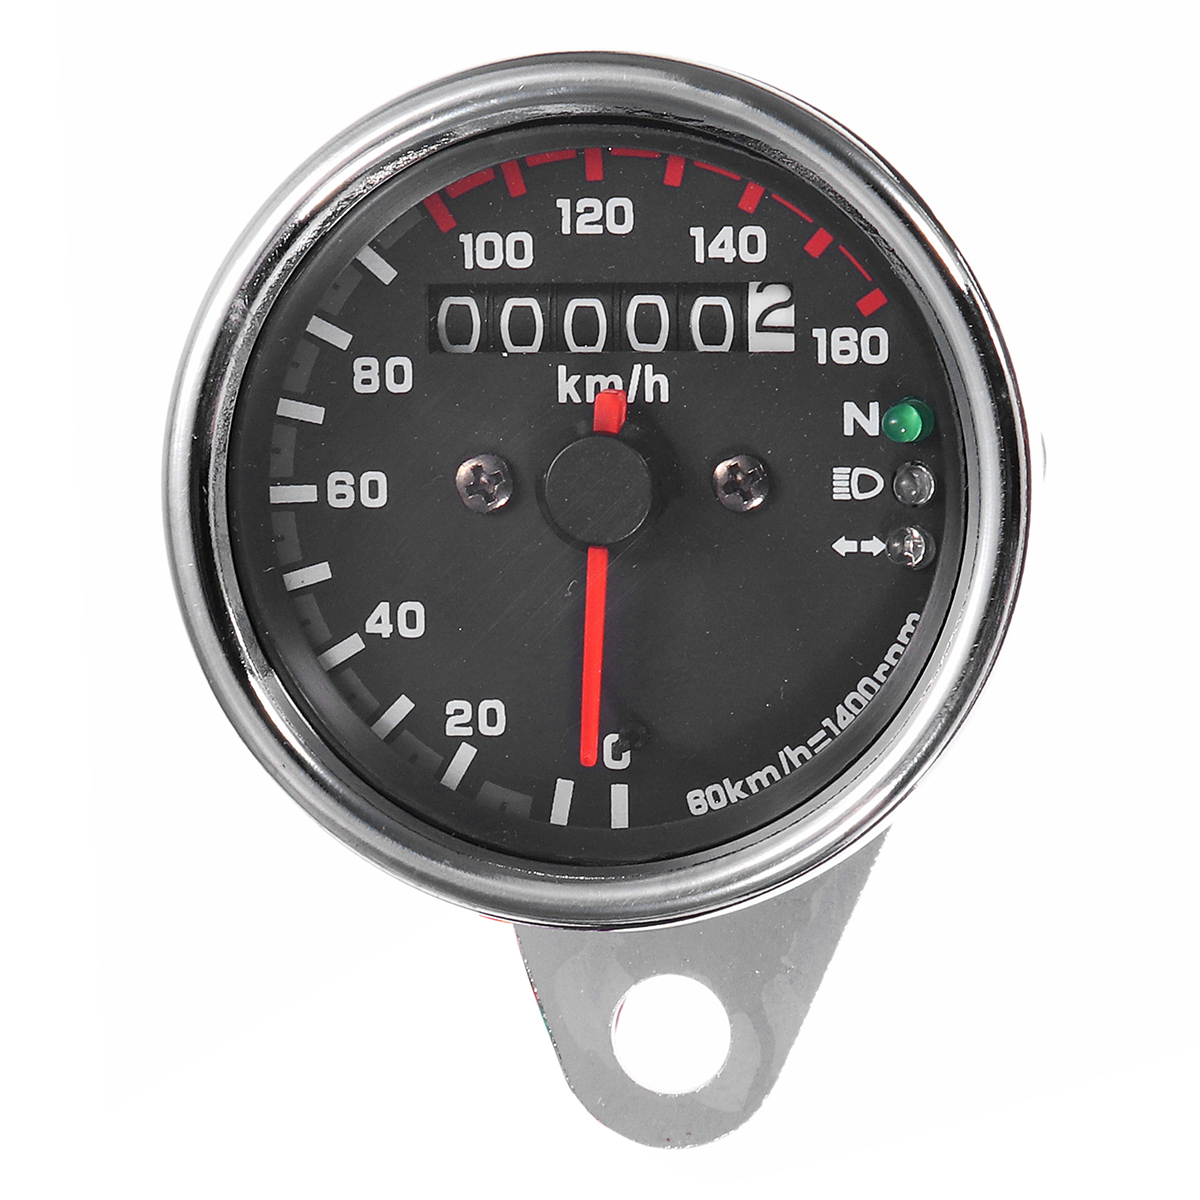 

12V Universal Motorcycle Speedometer Odometer Gauge Dual Speed Meter with LED Indicator